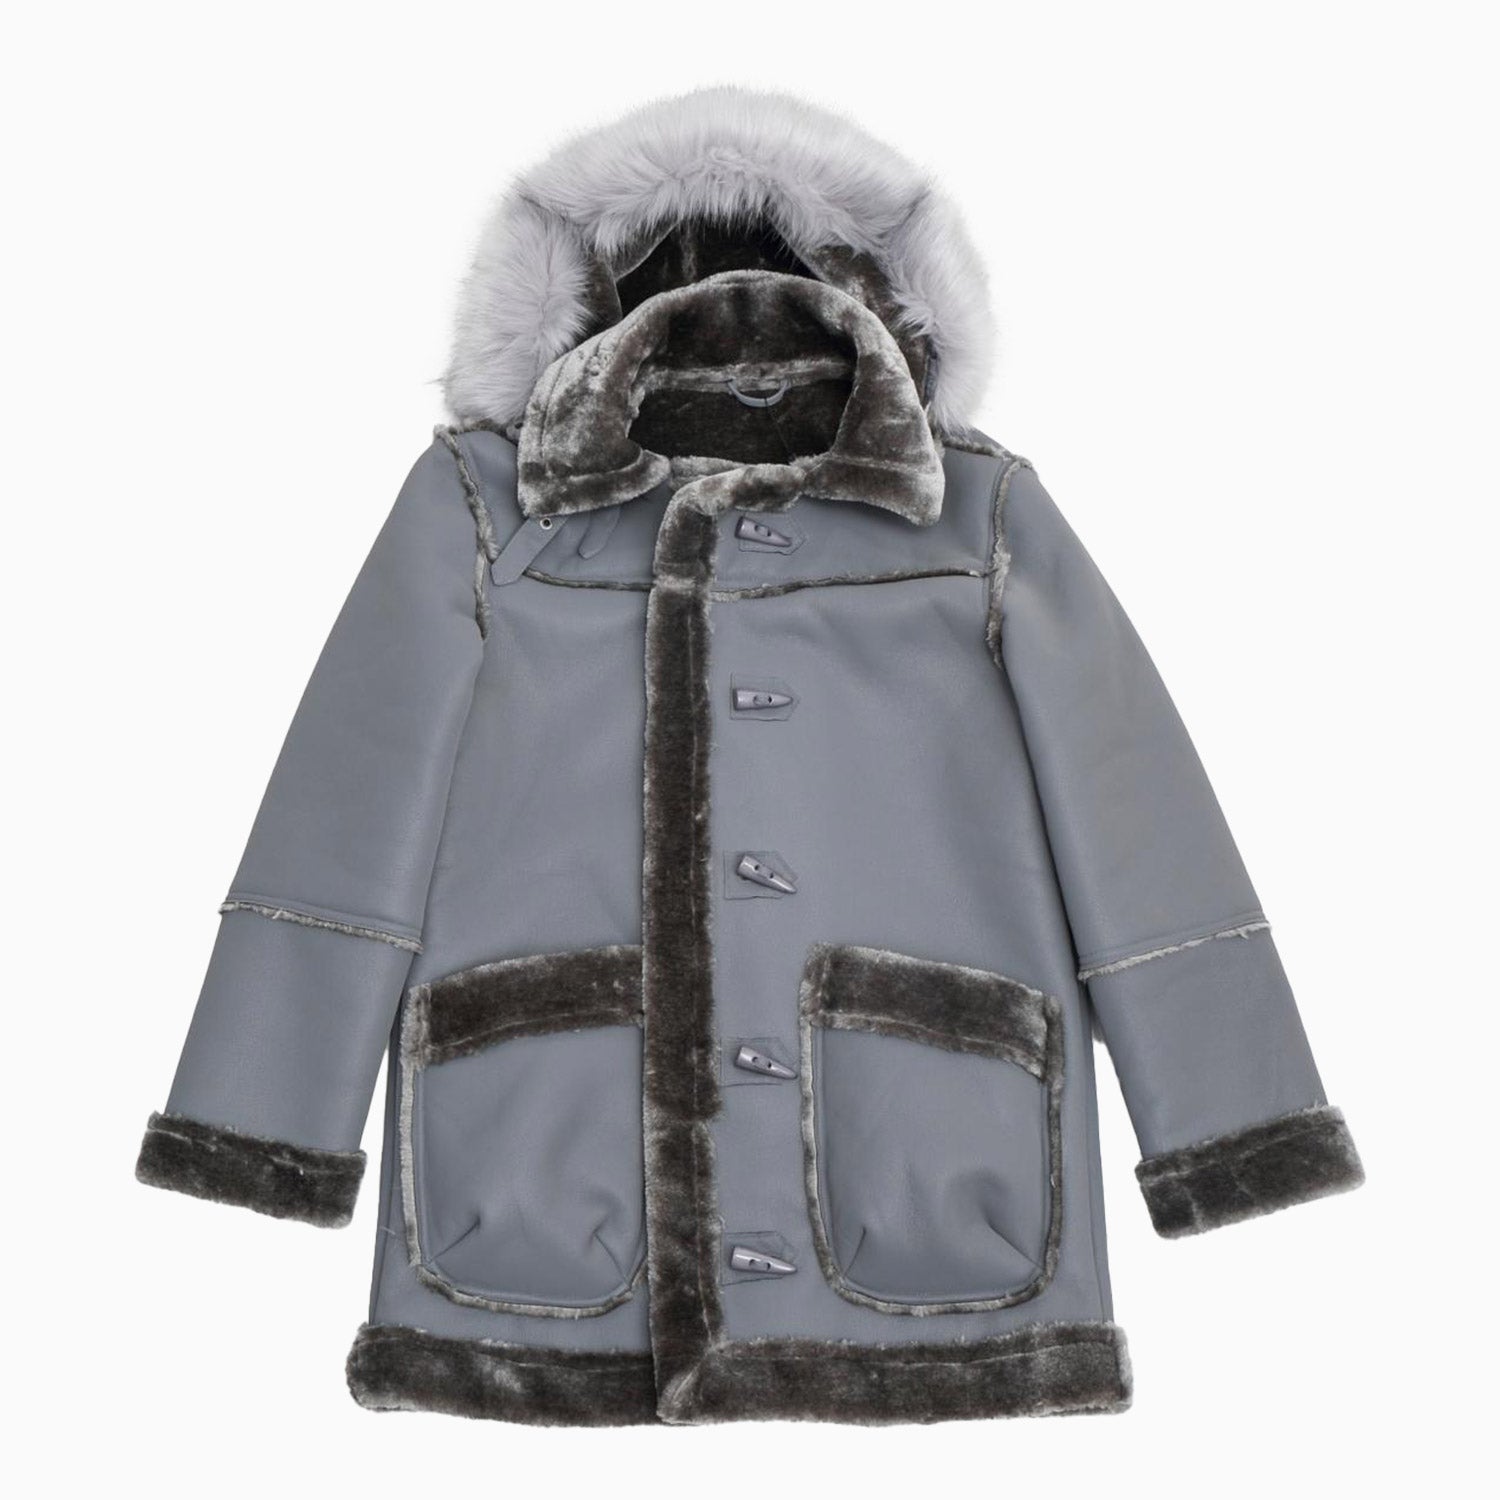 hudson-outerwear-mens-long-shearling-coat-jacket-h6052560-gry